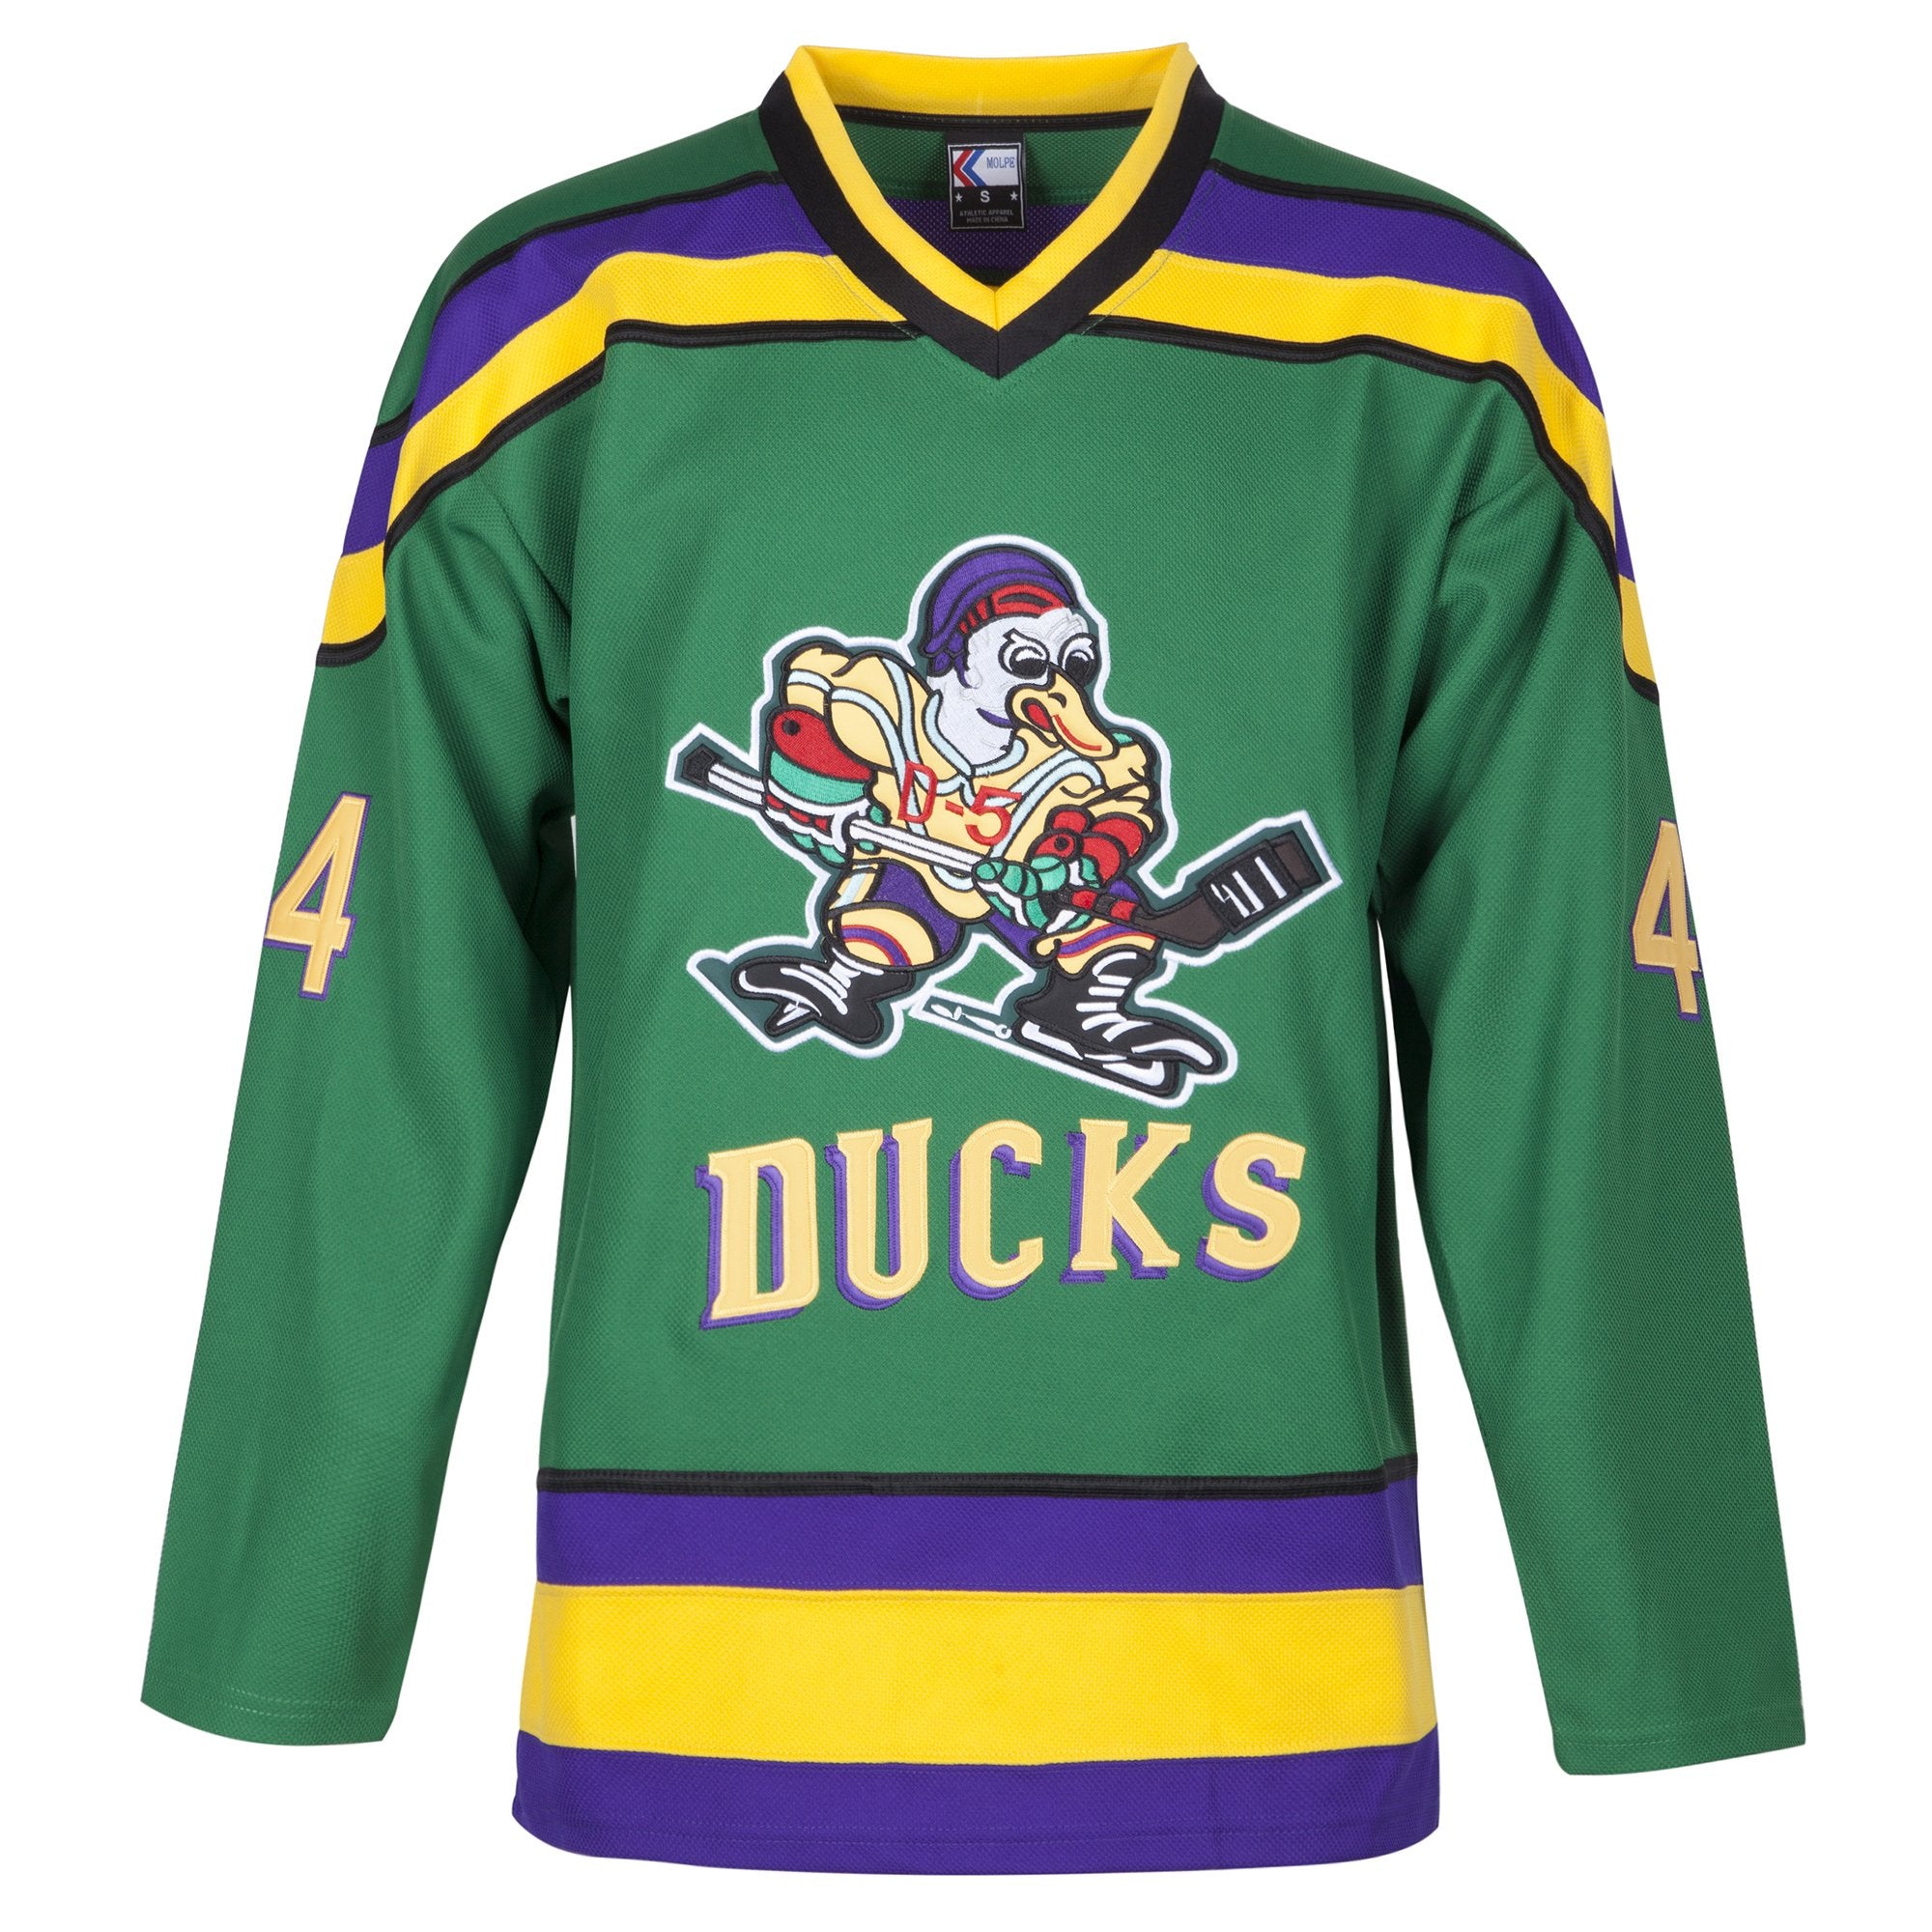 Fulton Reed 44 Mighty Ducks Hockey Jersey – MOLPE